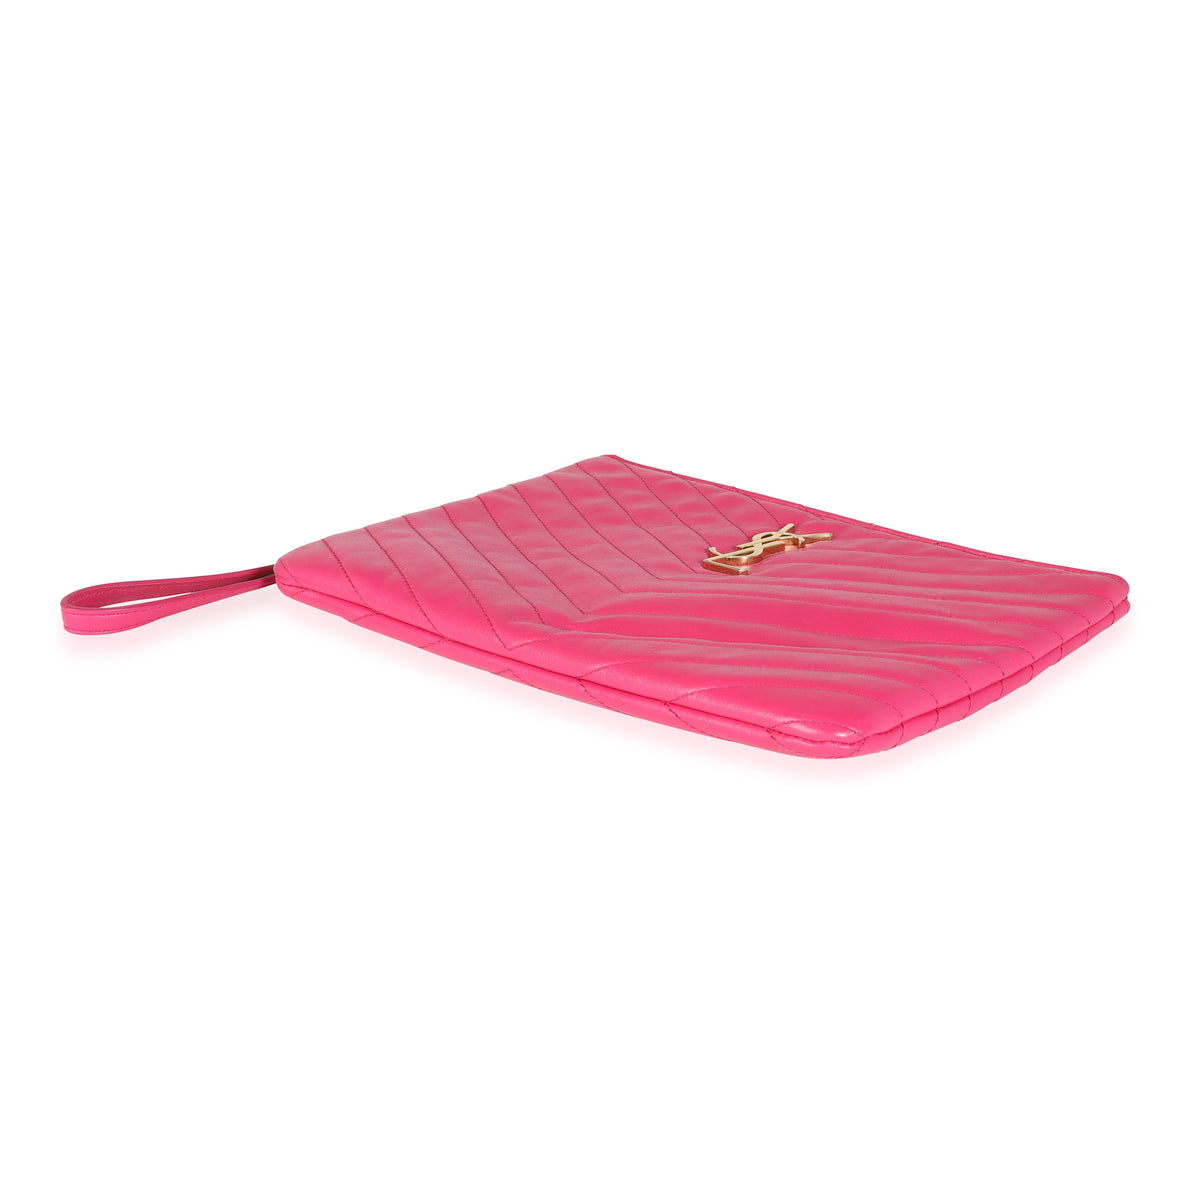 Saint Laurent Monogram Leather Phone Holder Bag in Pink